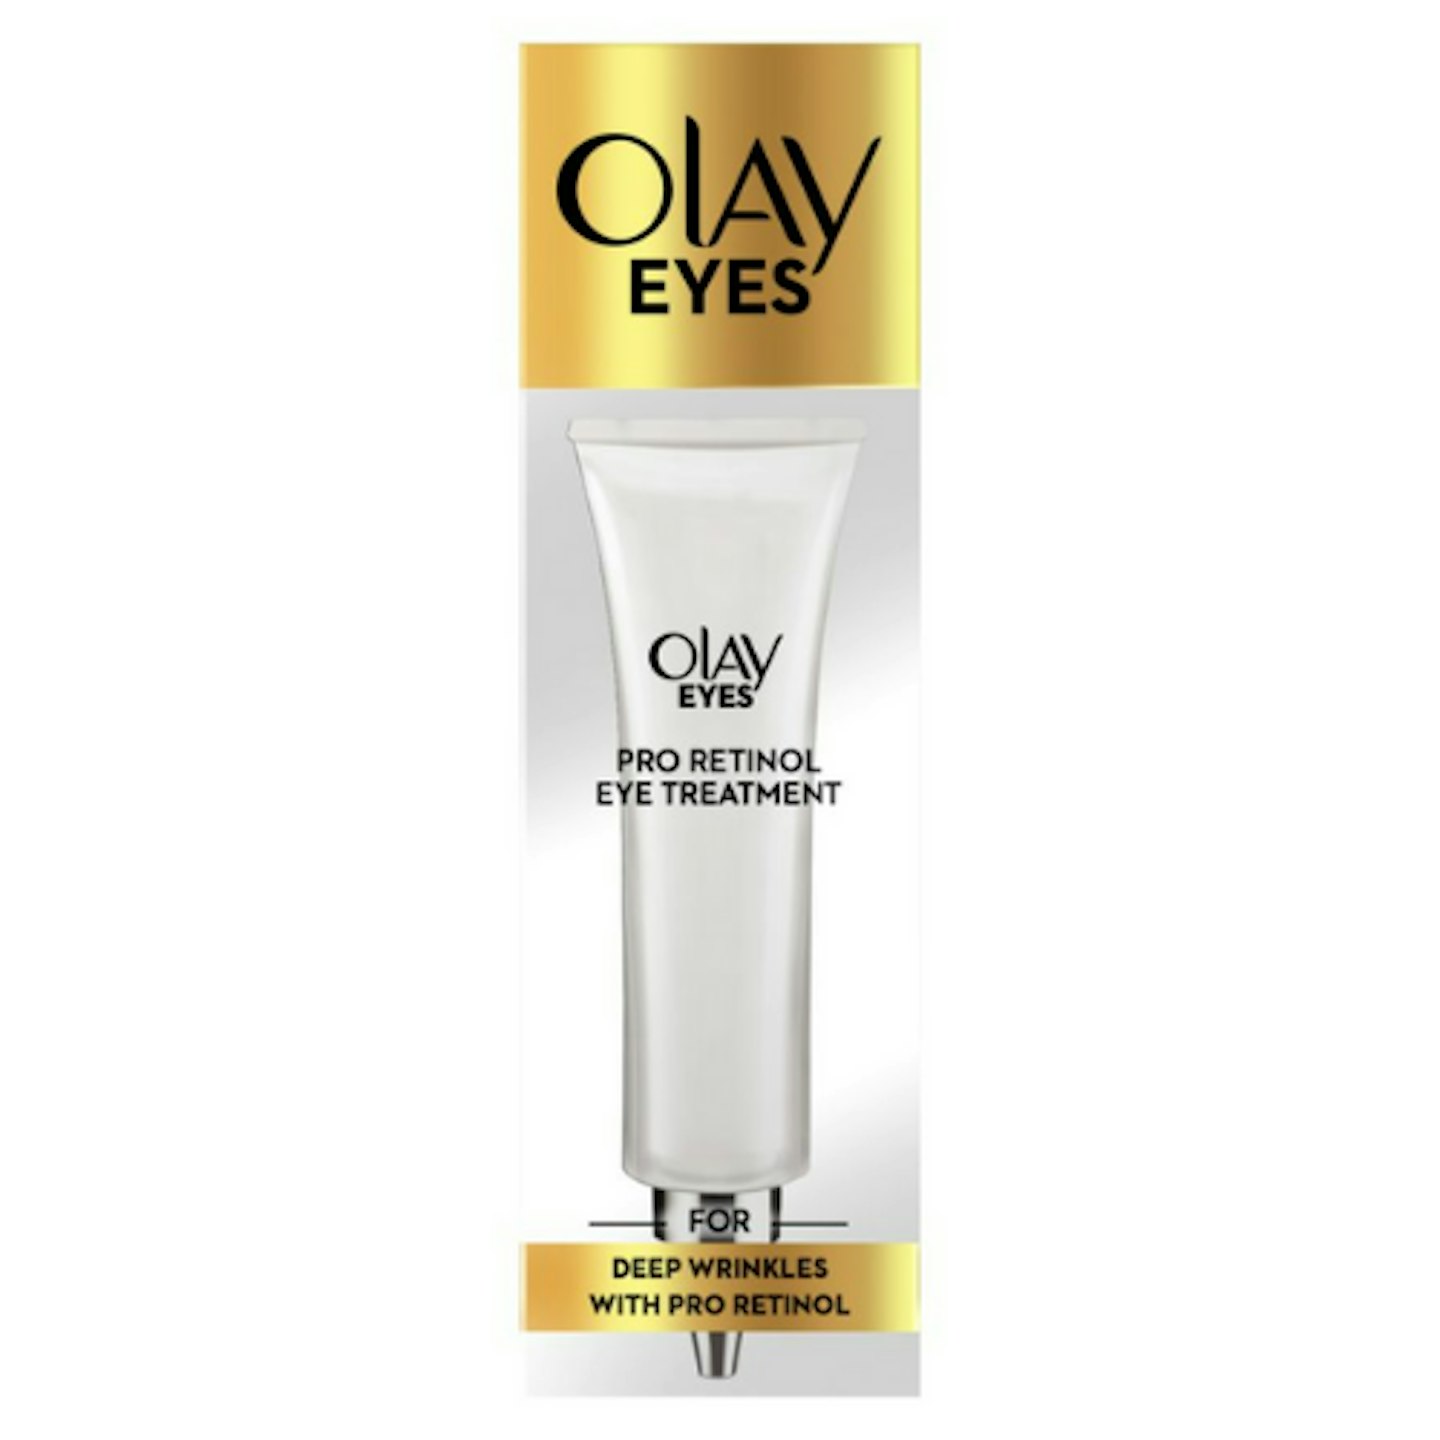 Olay Eyes Pro-Retinol Eye Treatment Moisturiser